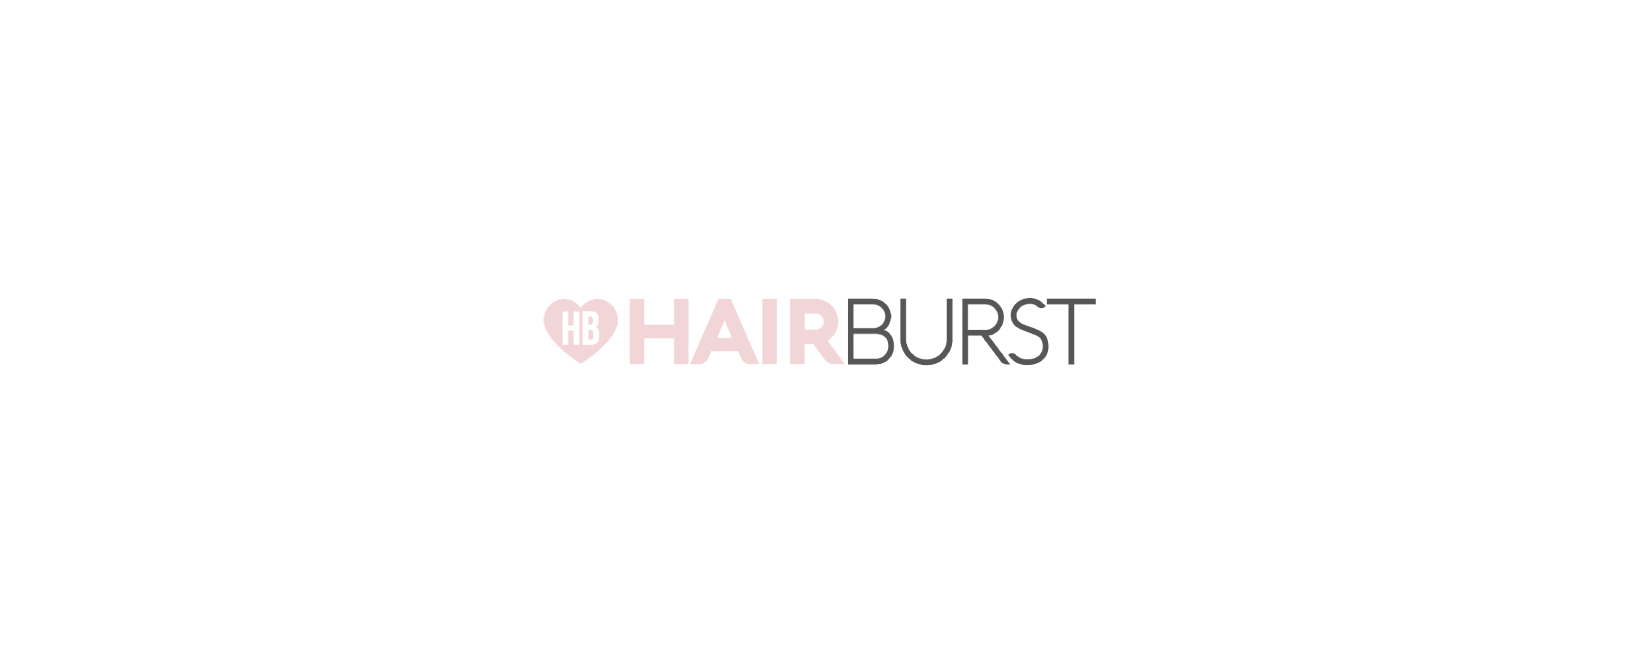 Hairburst Review – No Bad Hair Days!